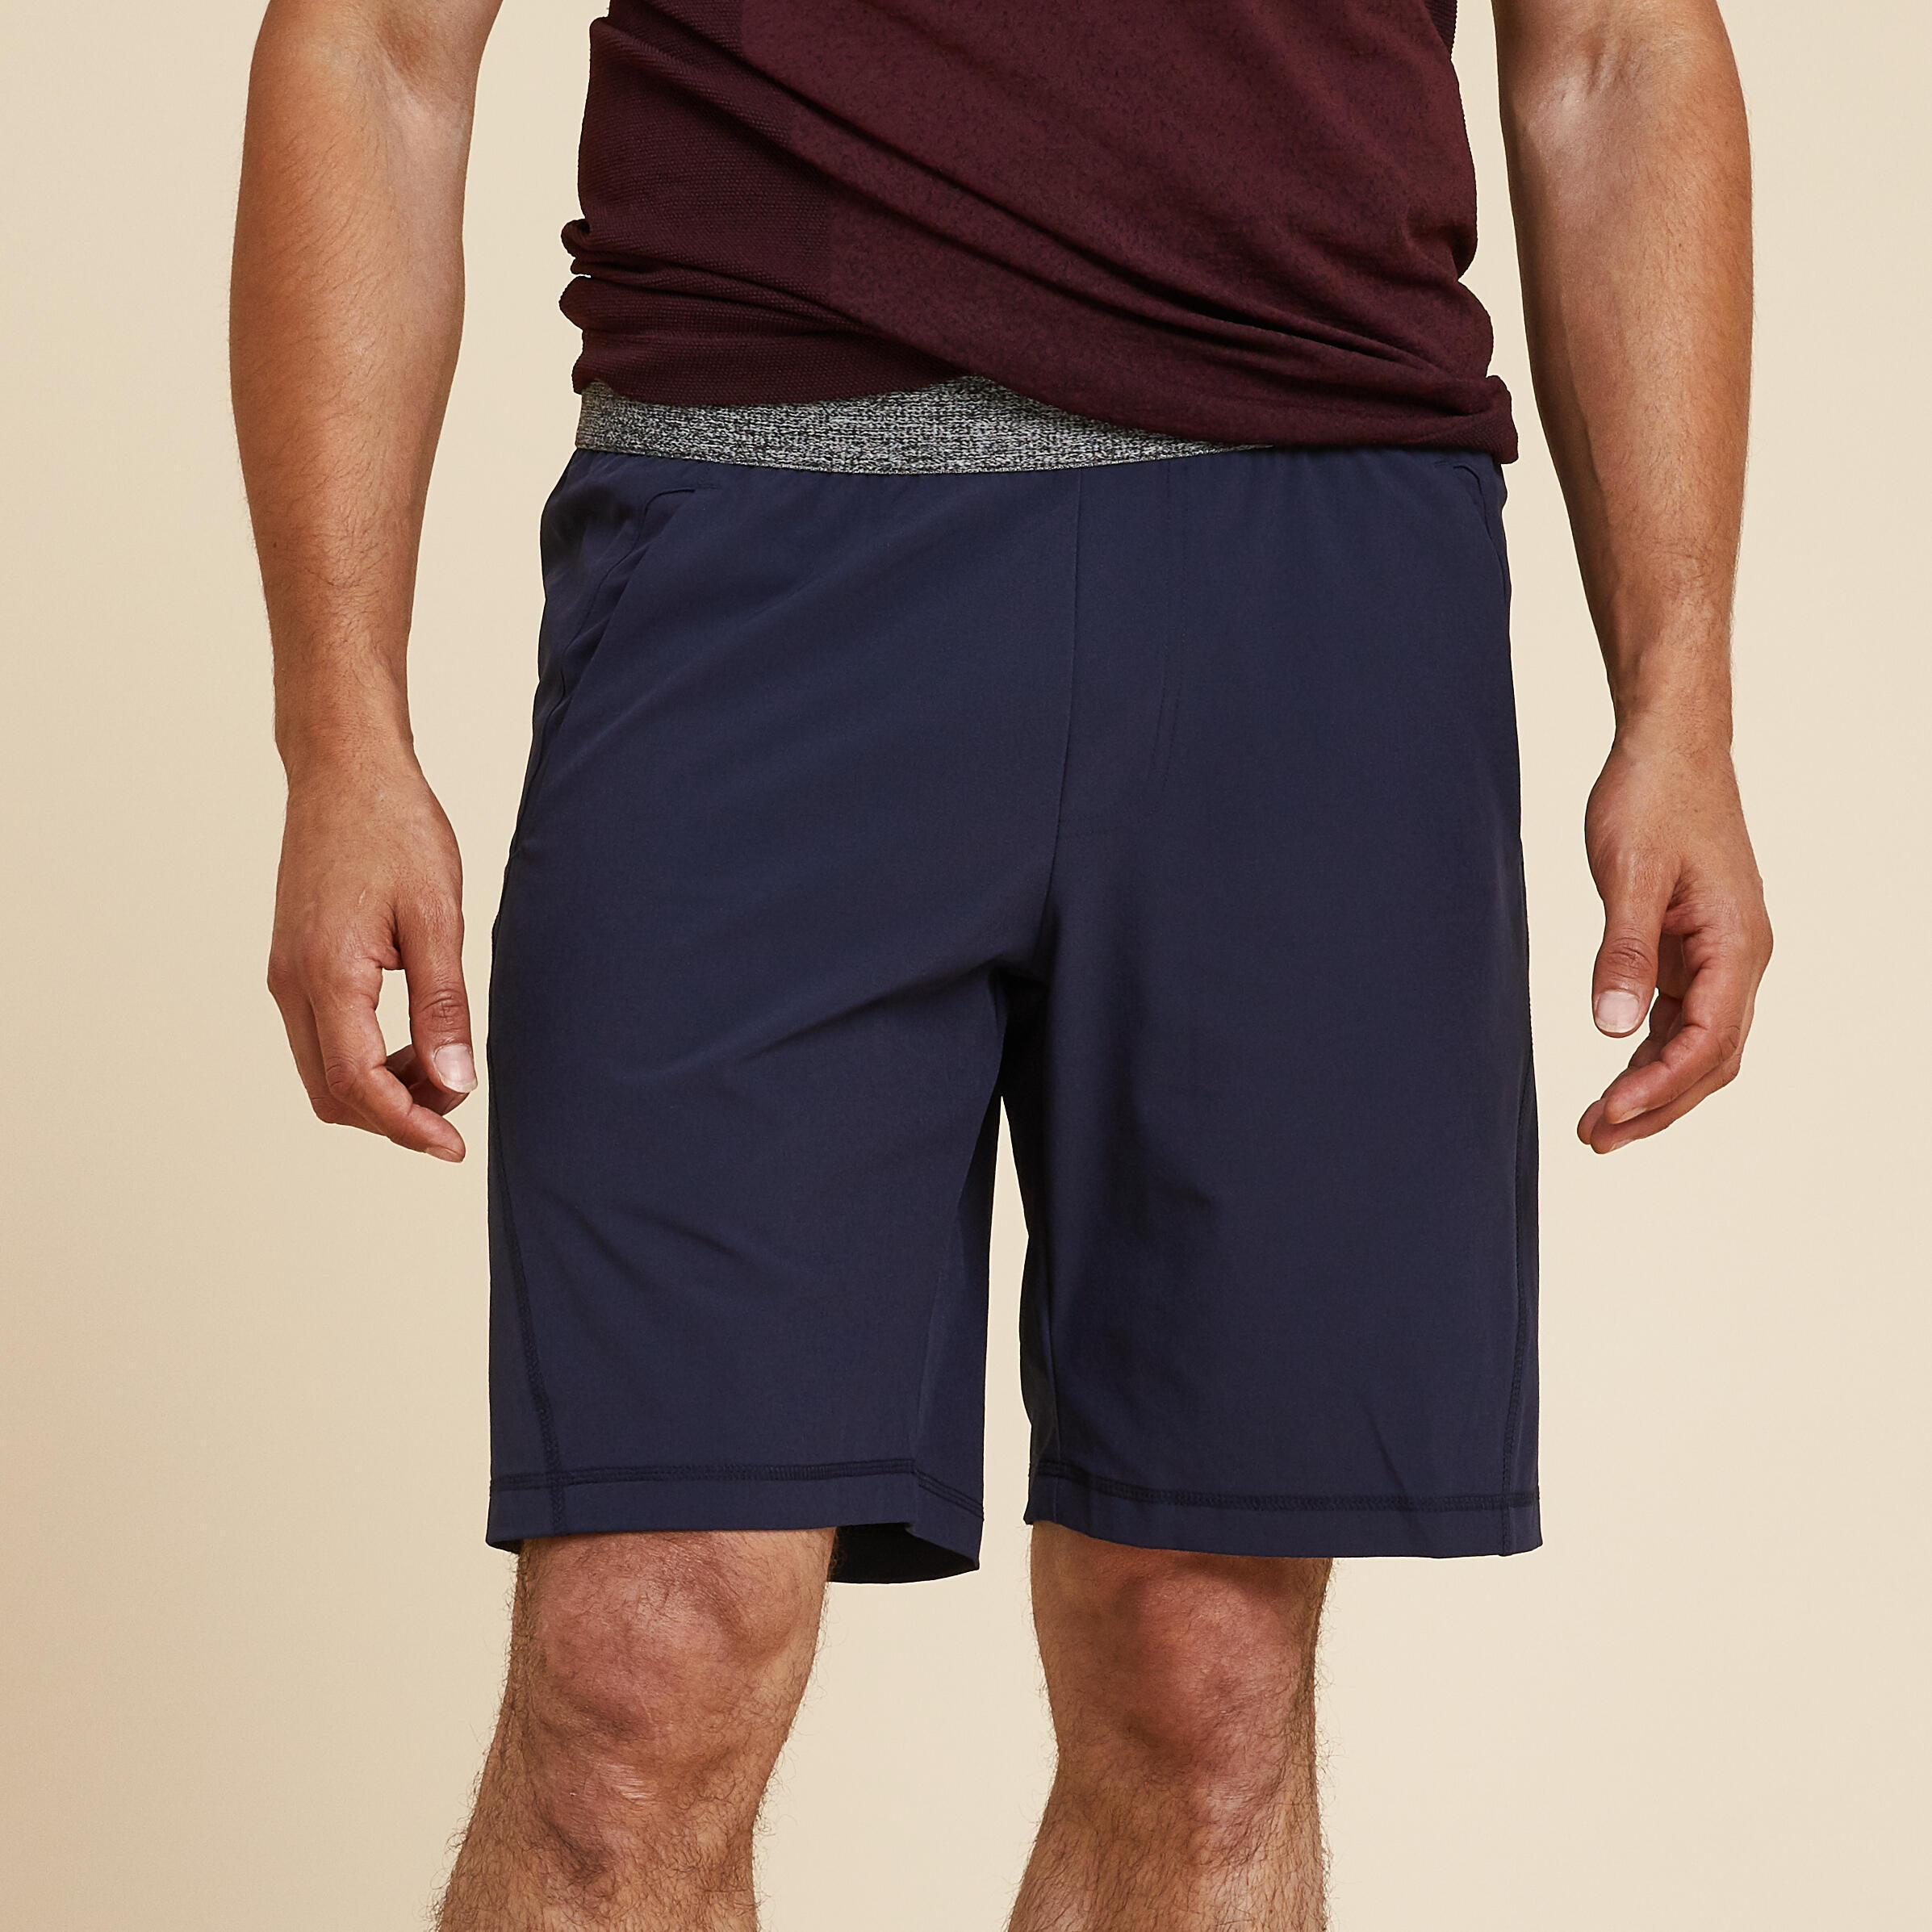 KIMJALY Men's Lightweight Dynamic Yoga Shorts - Navy Blue